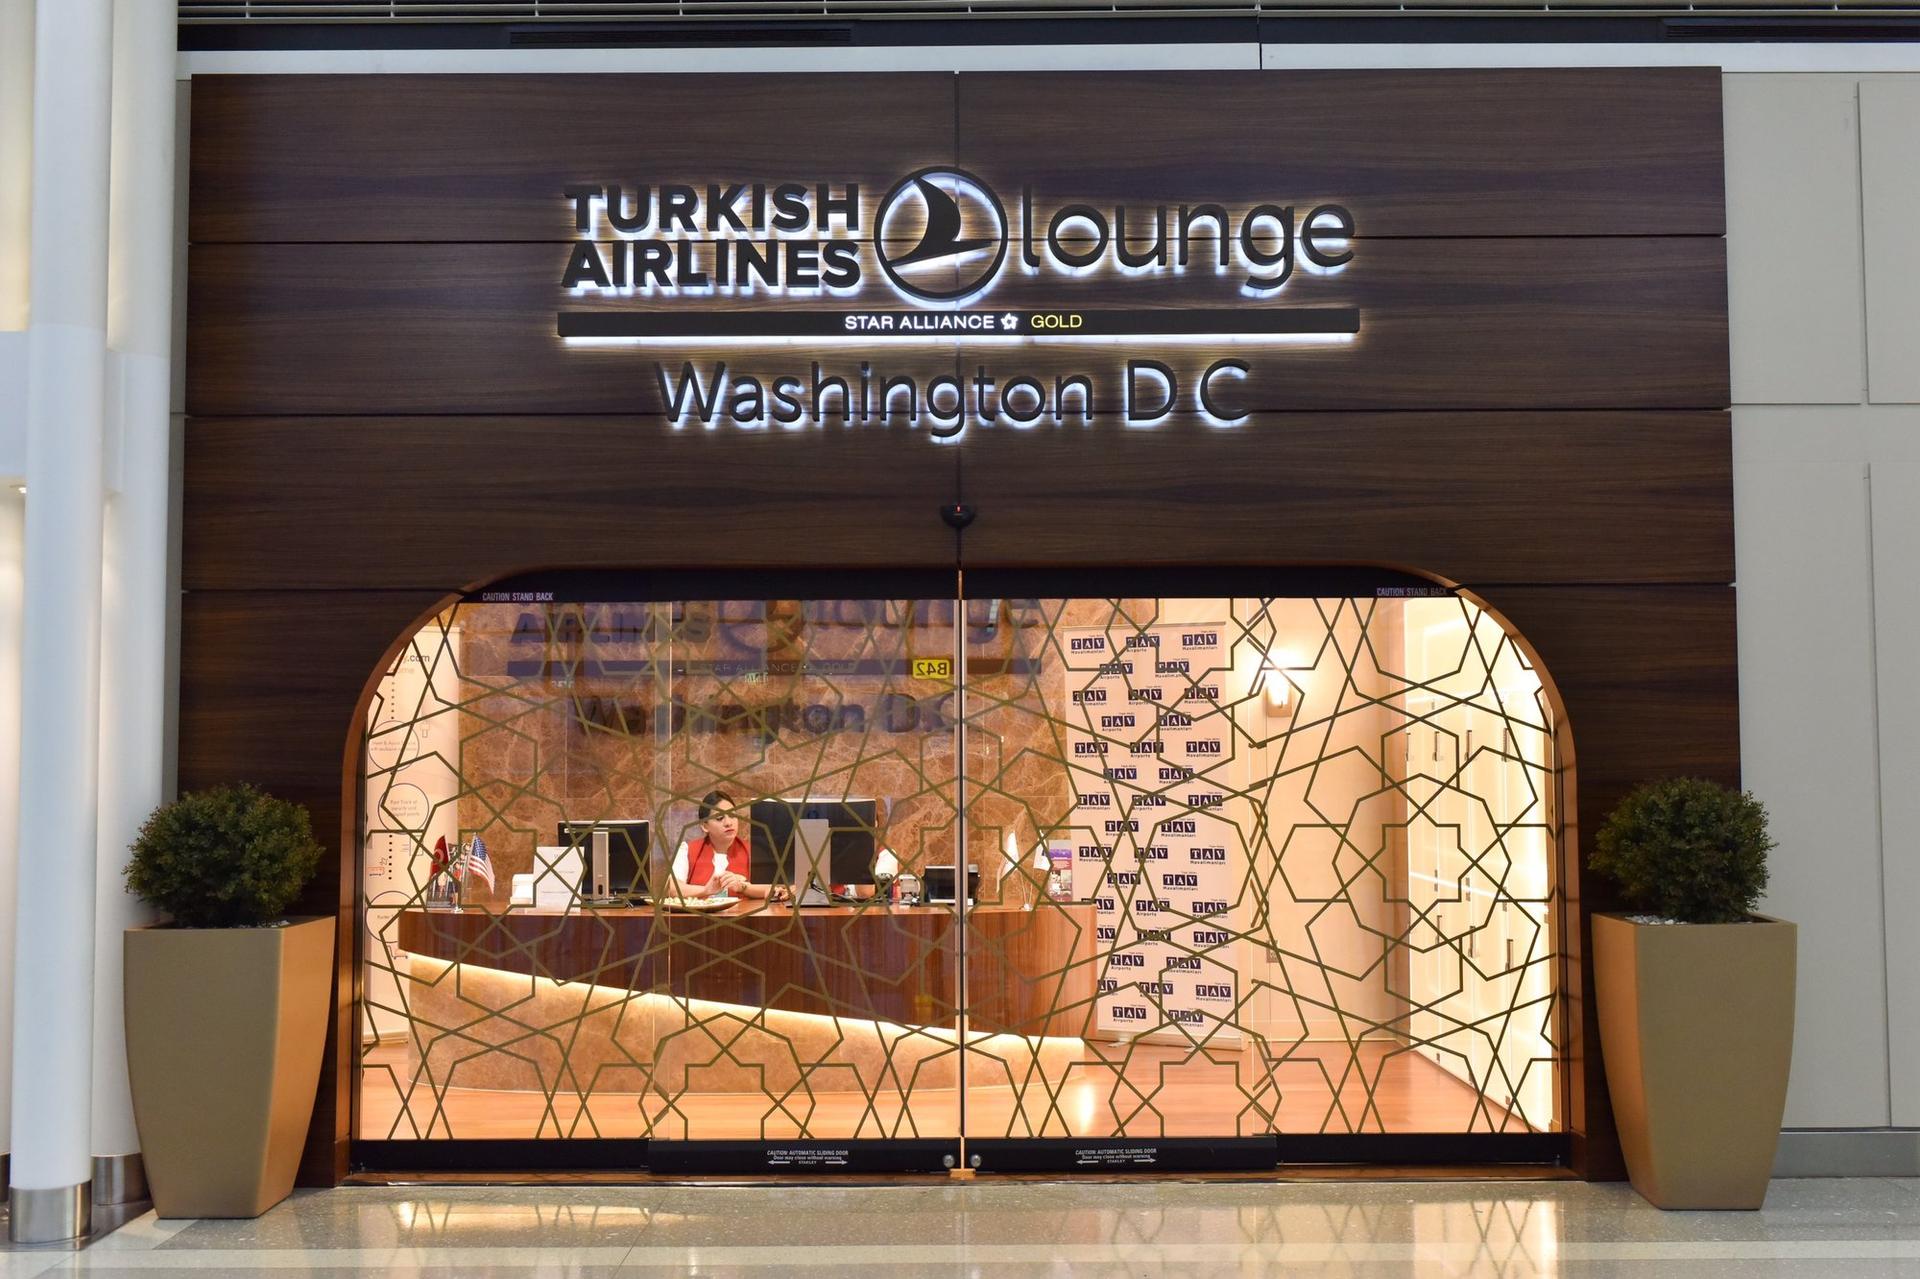 Turkish Airlines Lounge Washington D.C. image 11 of 100